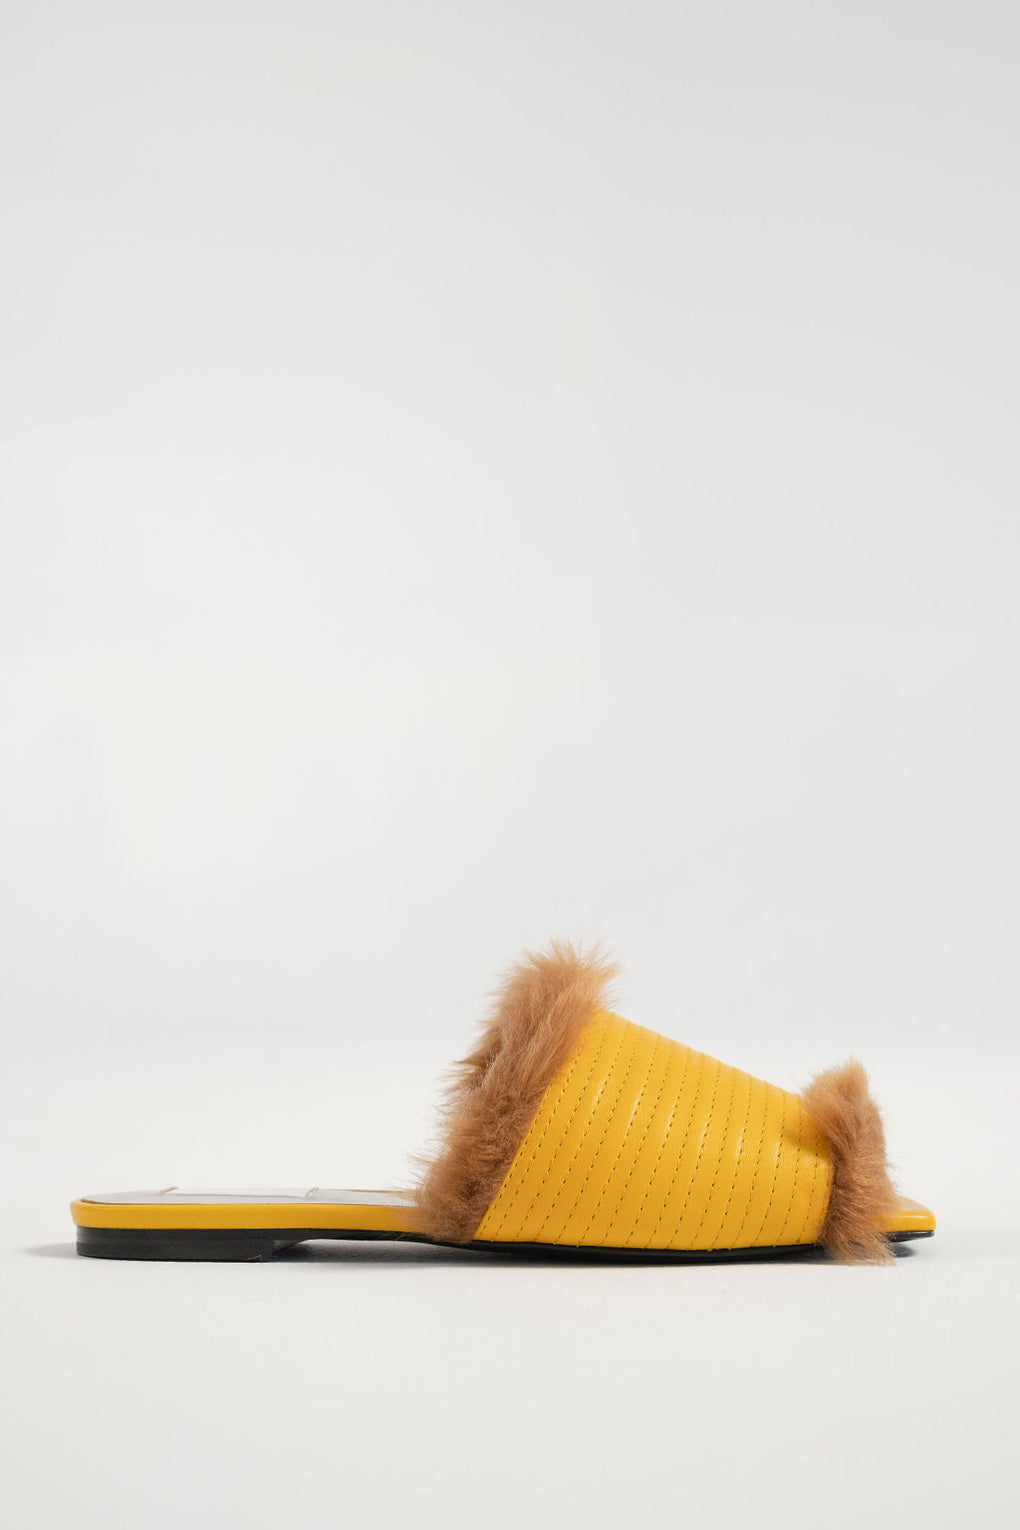 Suzanne Rae-Faux Mink Slide-yellow slides-fur mule-Idun-St. Paul